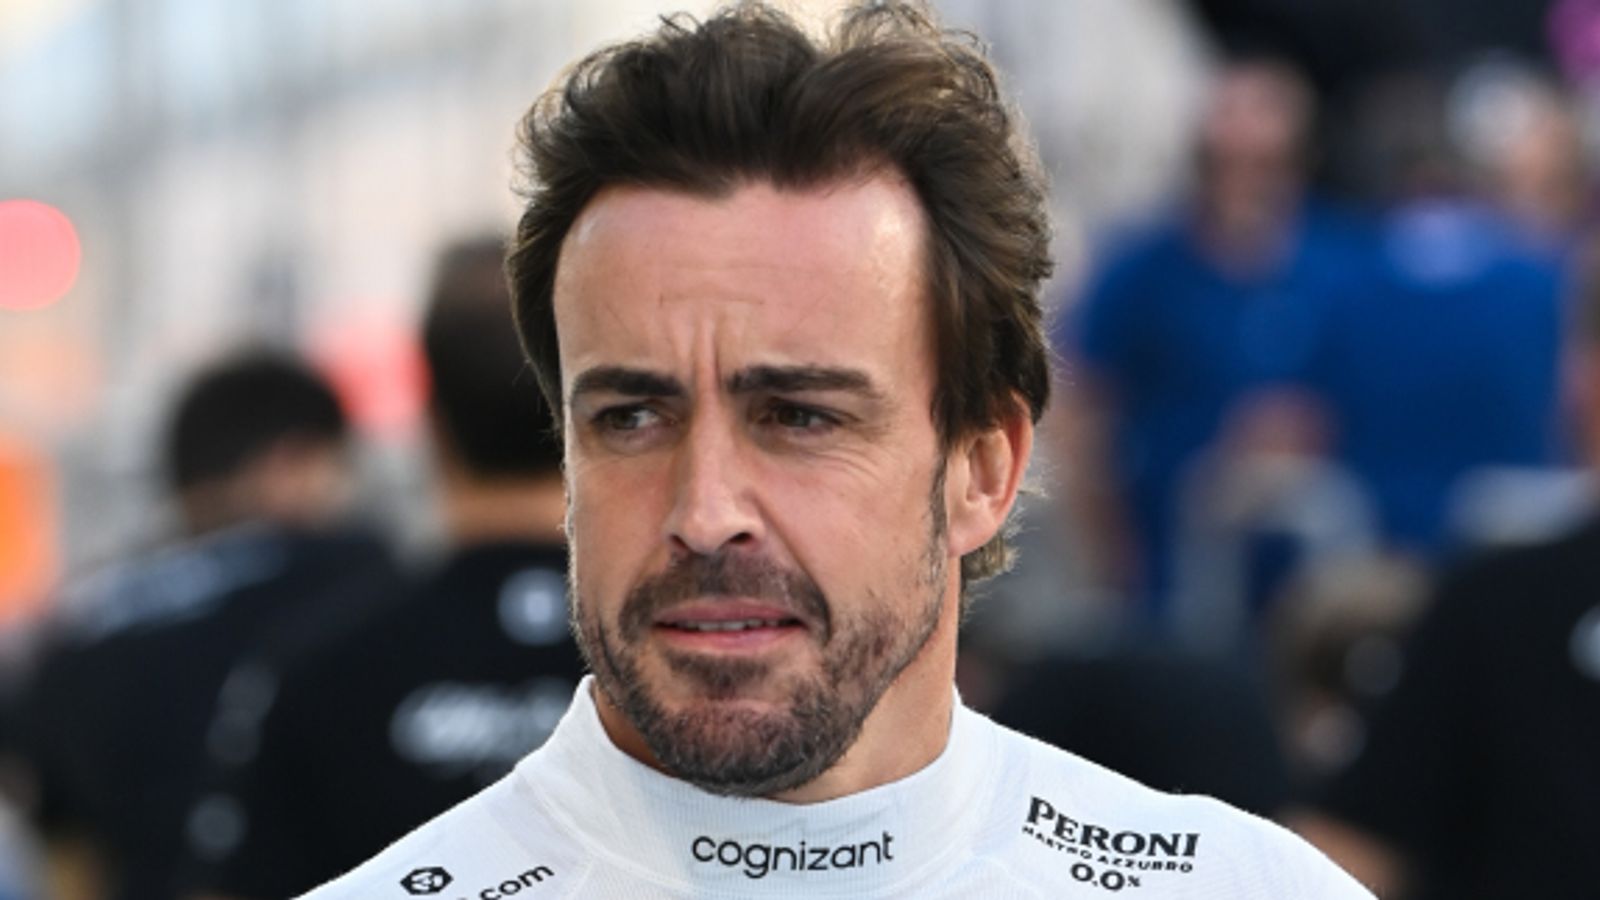 Fernando Alonso plays down Aston Martin podium hopes at F1 season-opening Bahrain GP despite rivals’ expectations